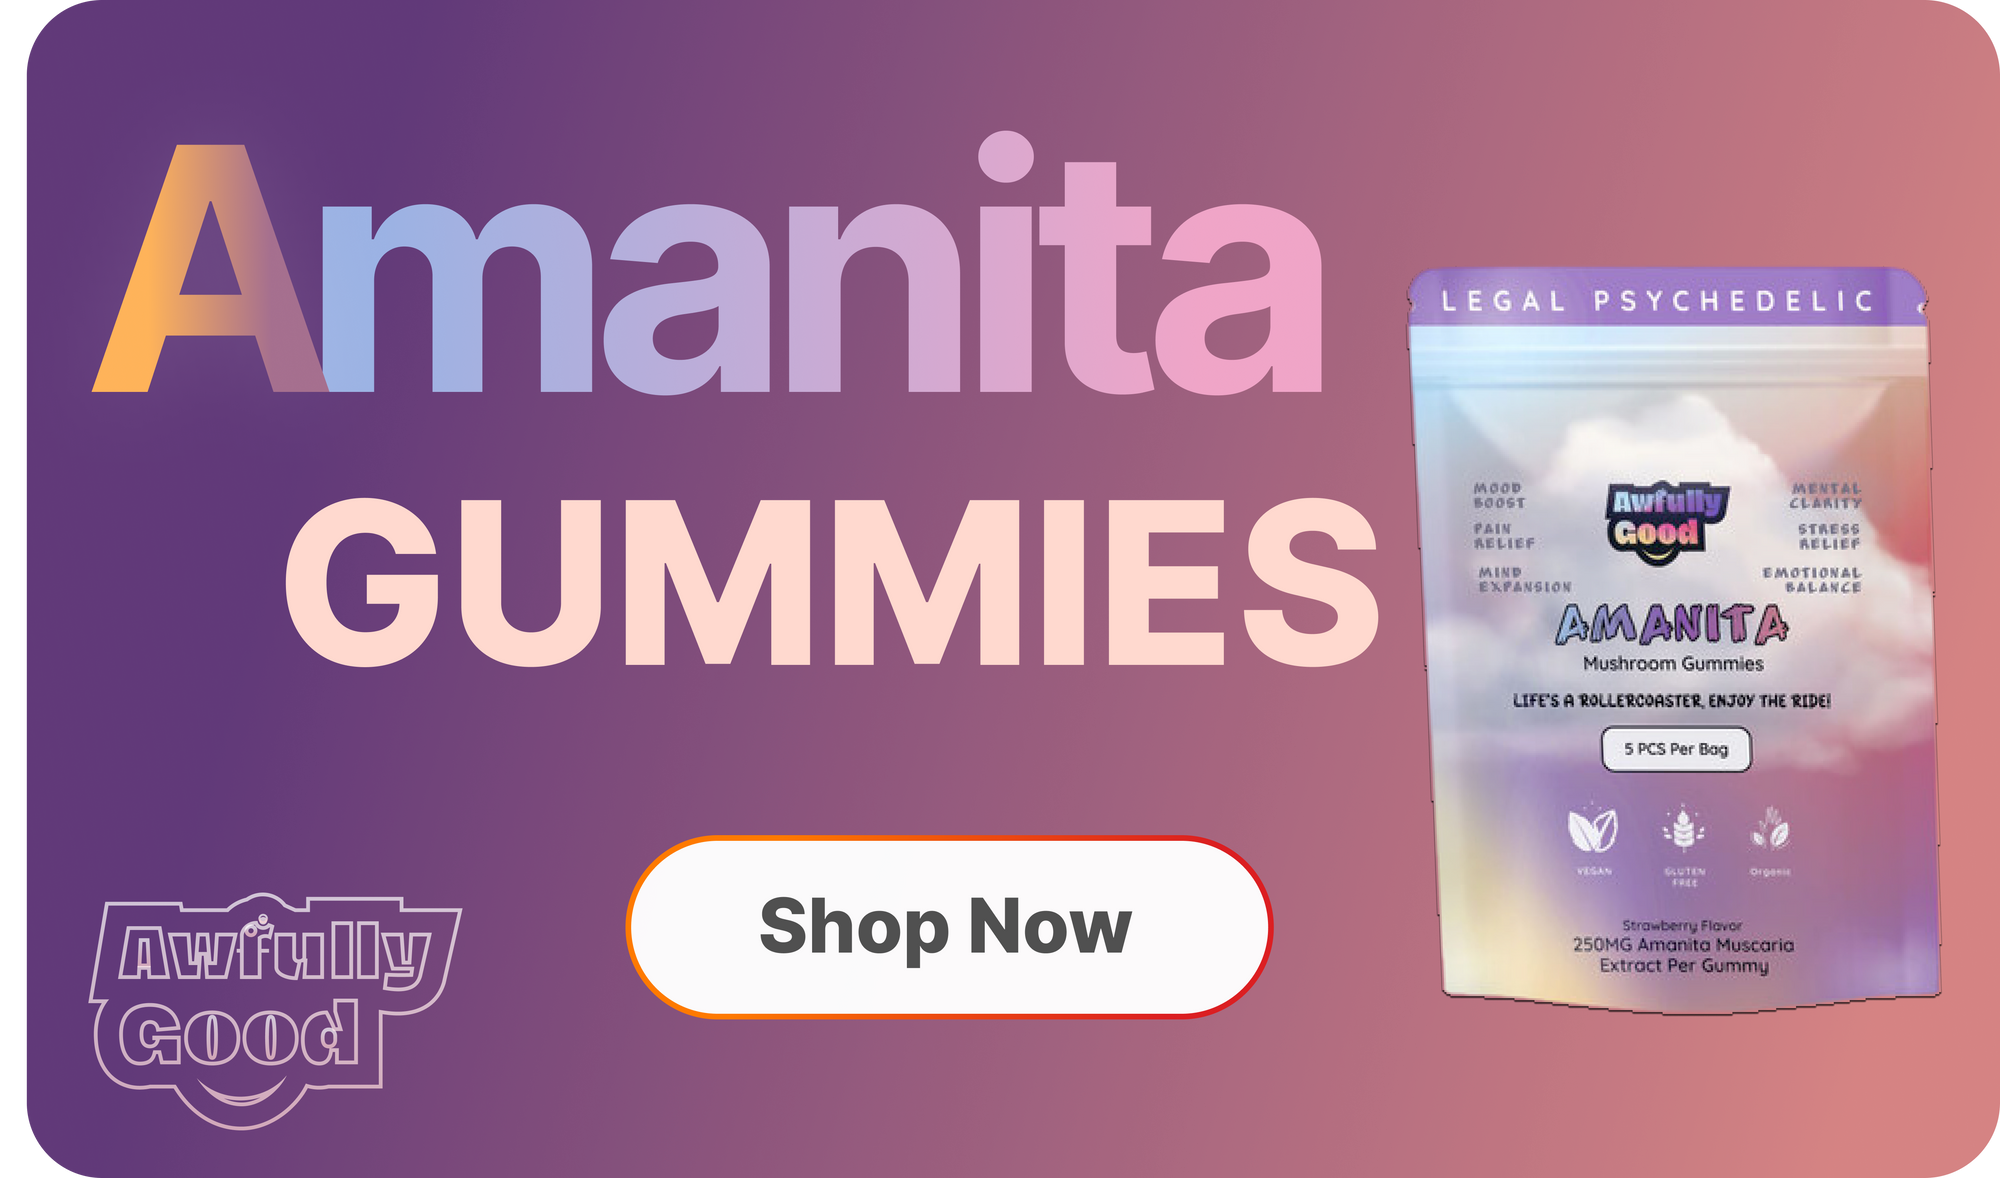 amanita mushroom gummies rectangular product card